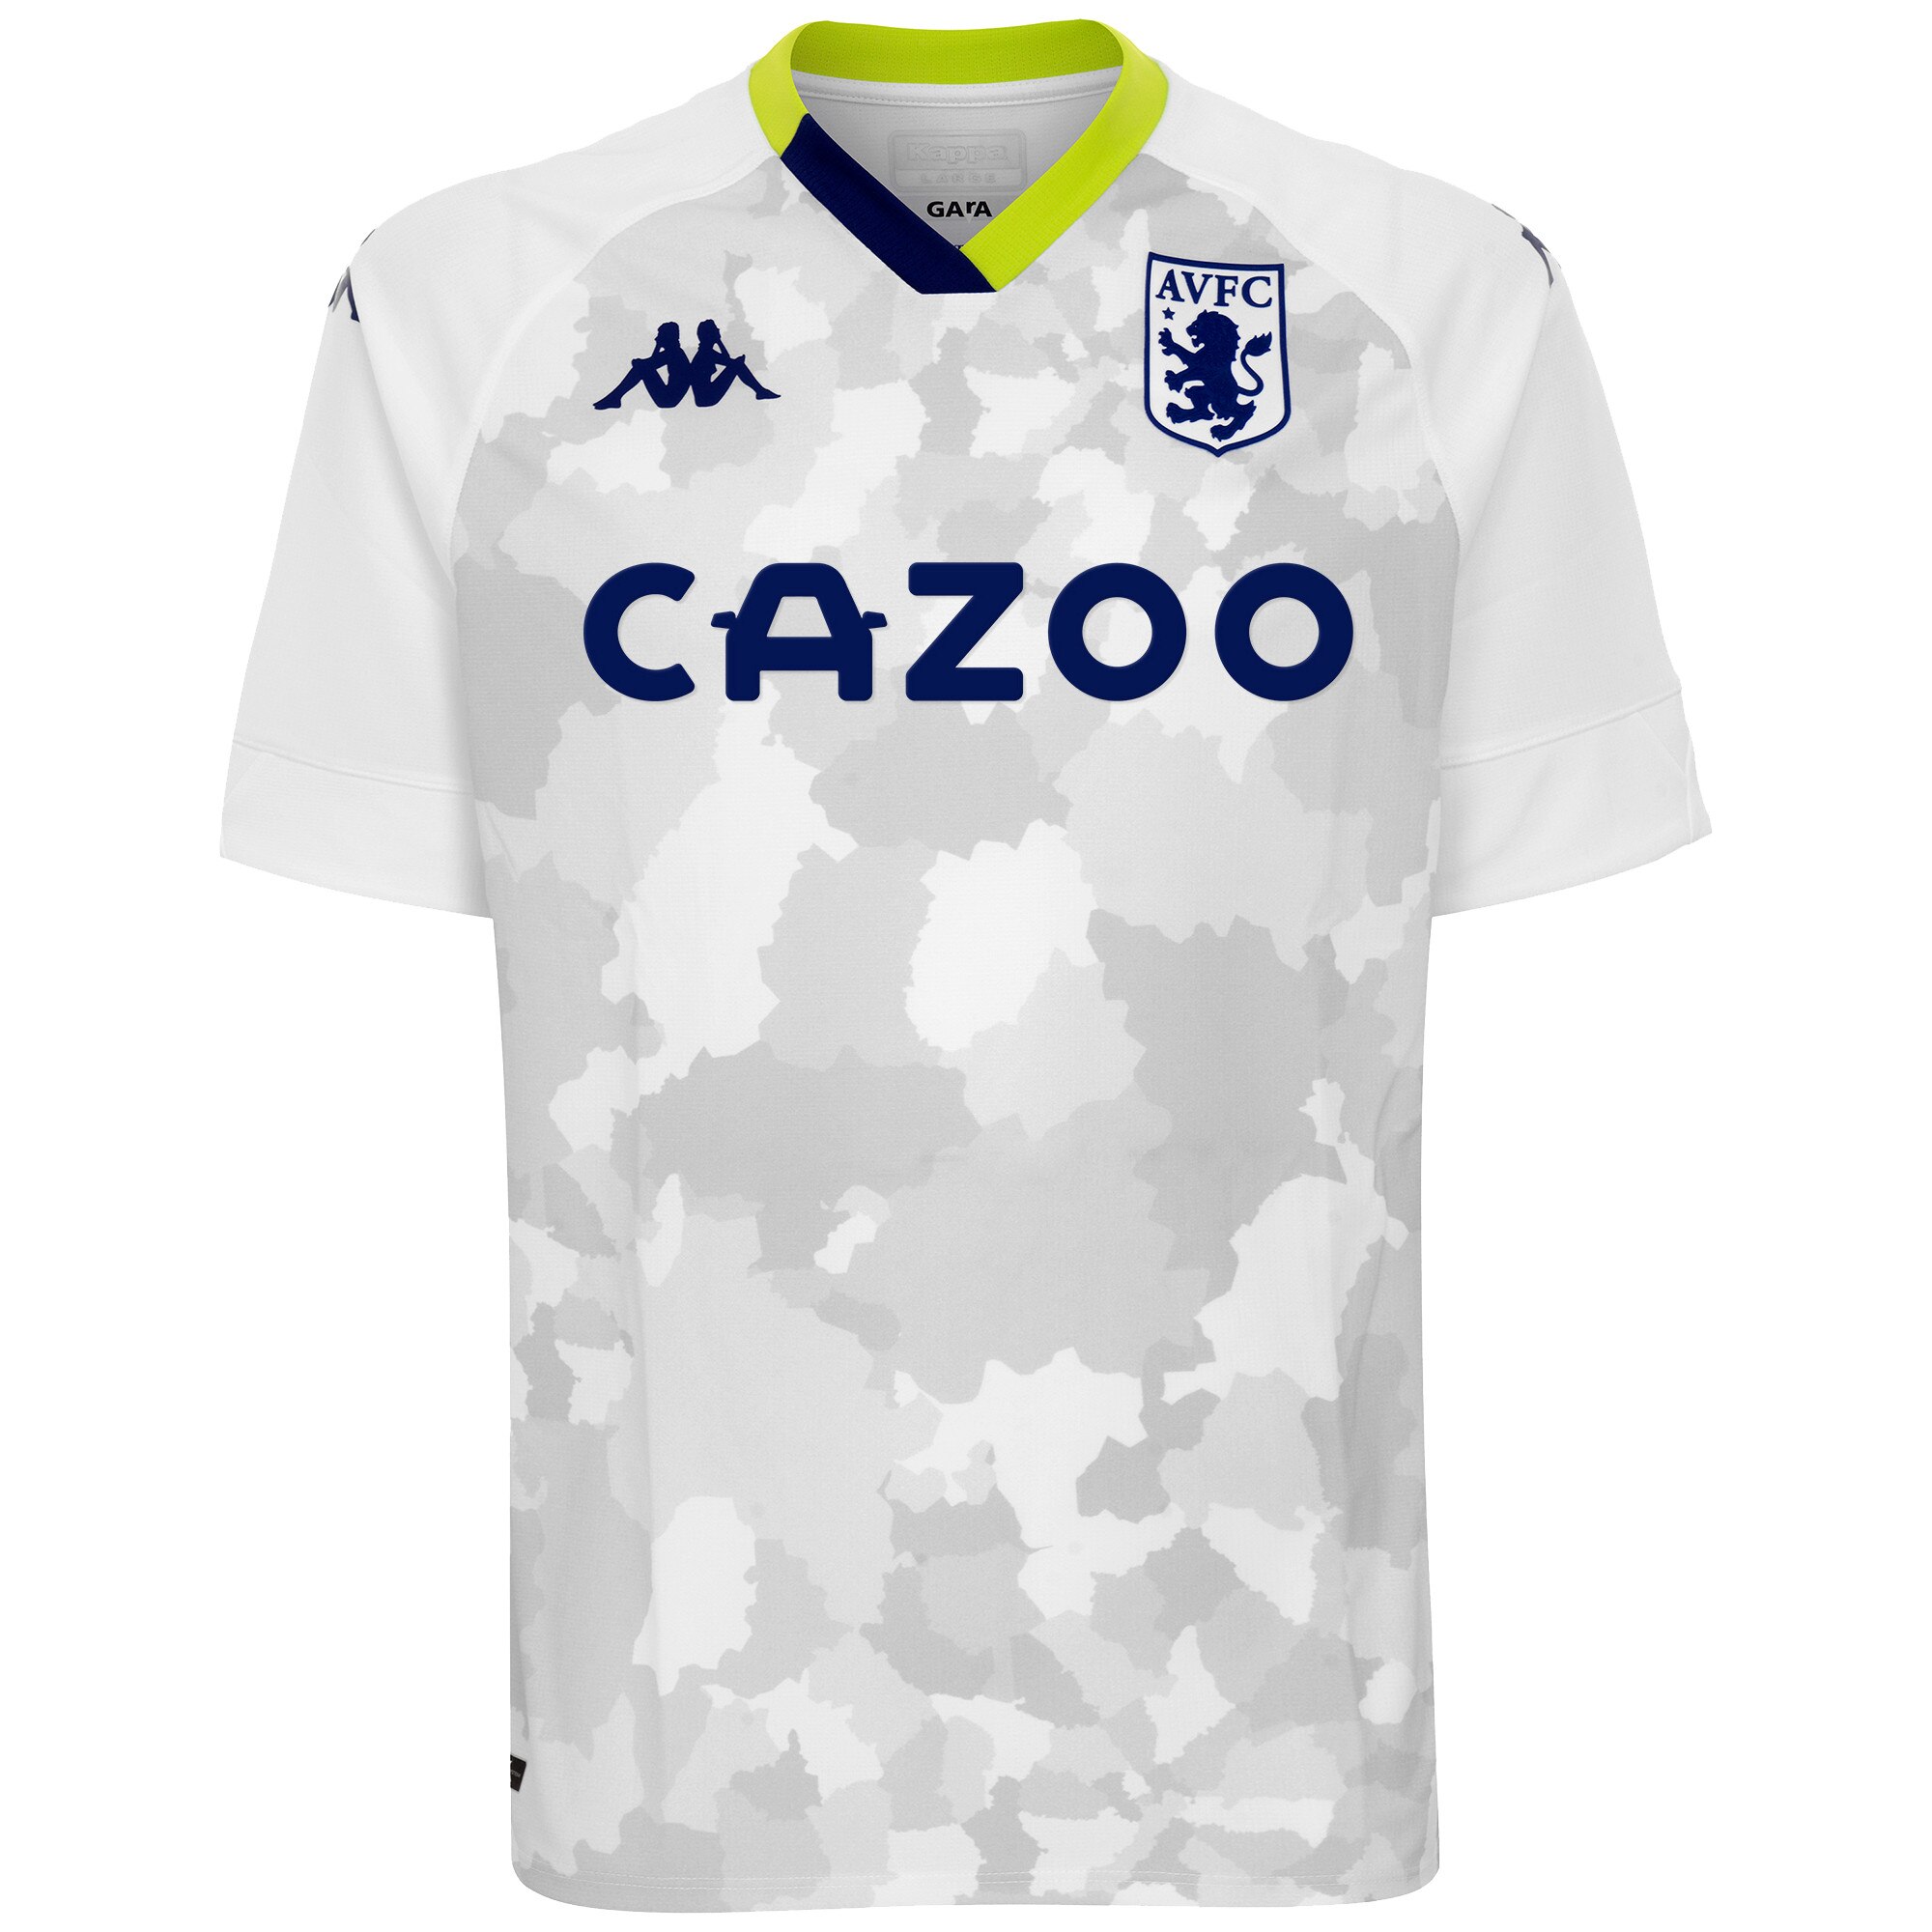 Aston Villa Third Stadium Shirt 2020-21 with Cash 2 printing